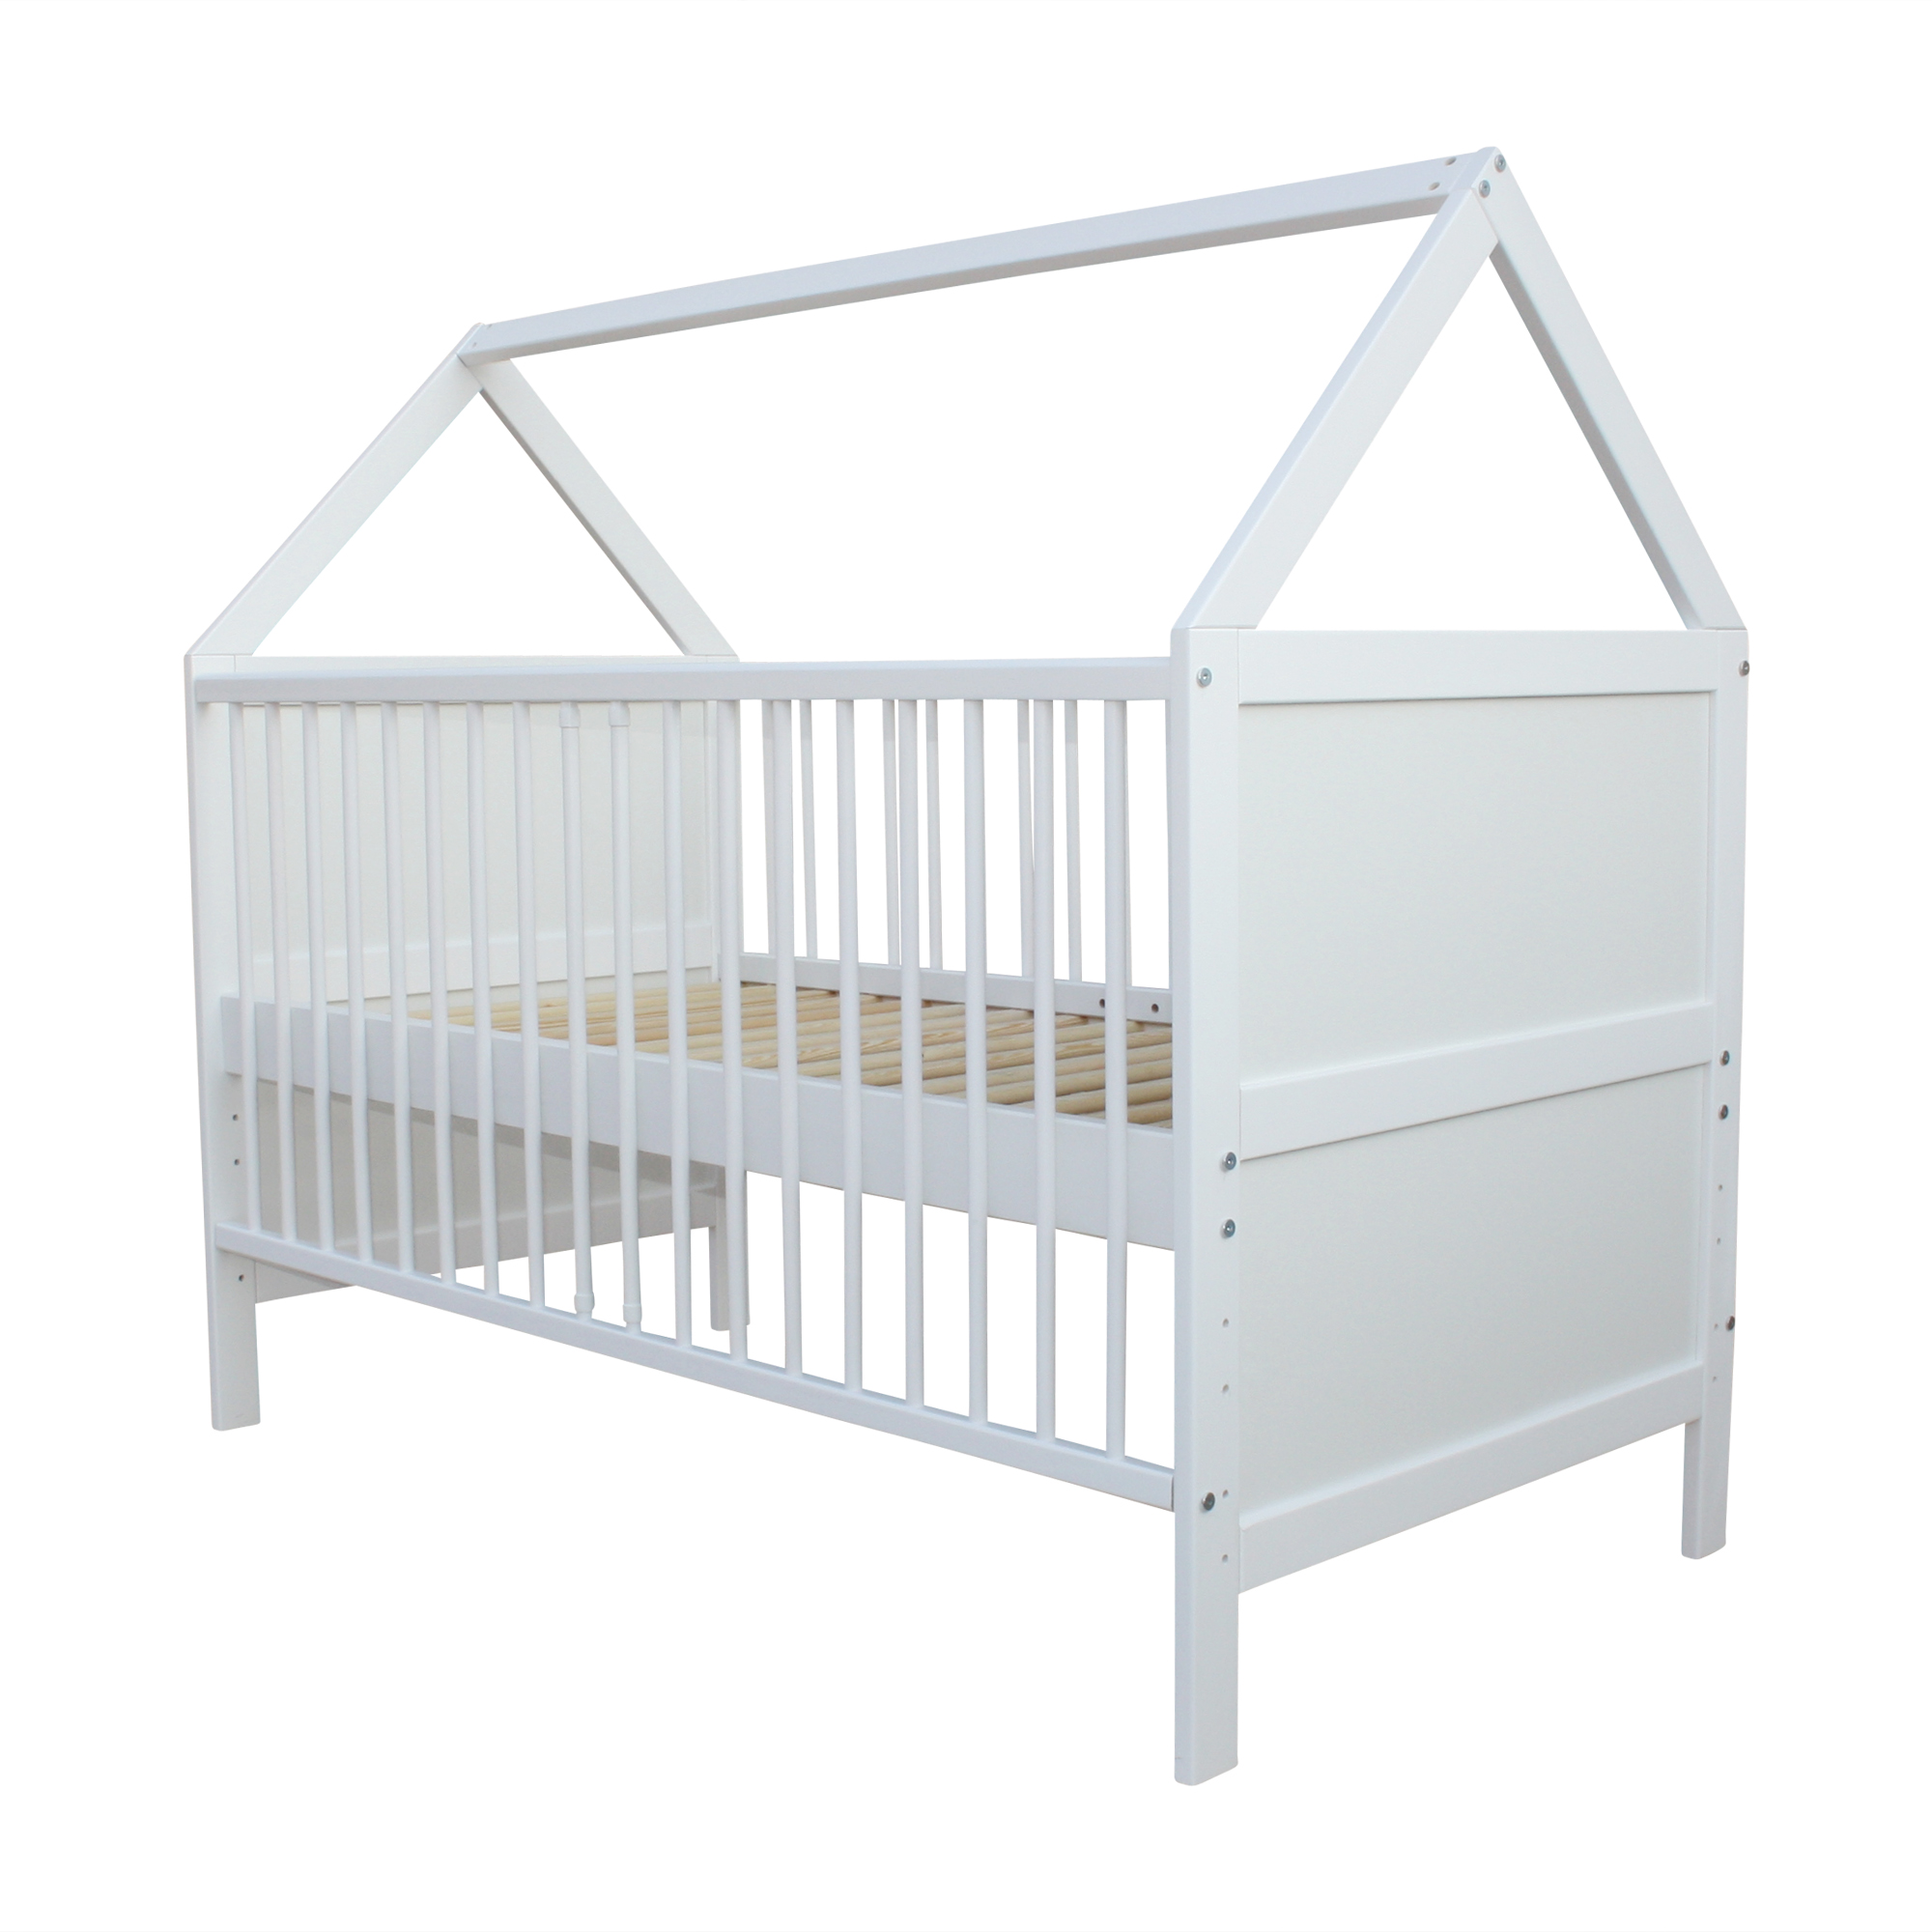 Micoland Kinderbett Juniorbett G 160x70 cm umbaubar weiß 